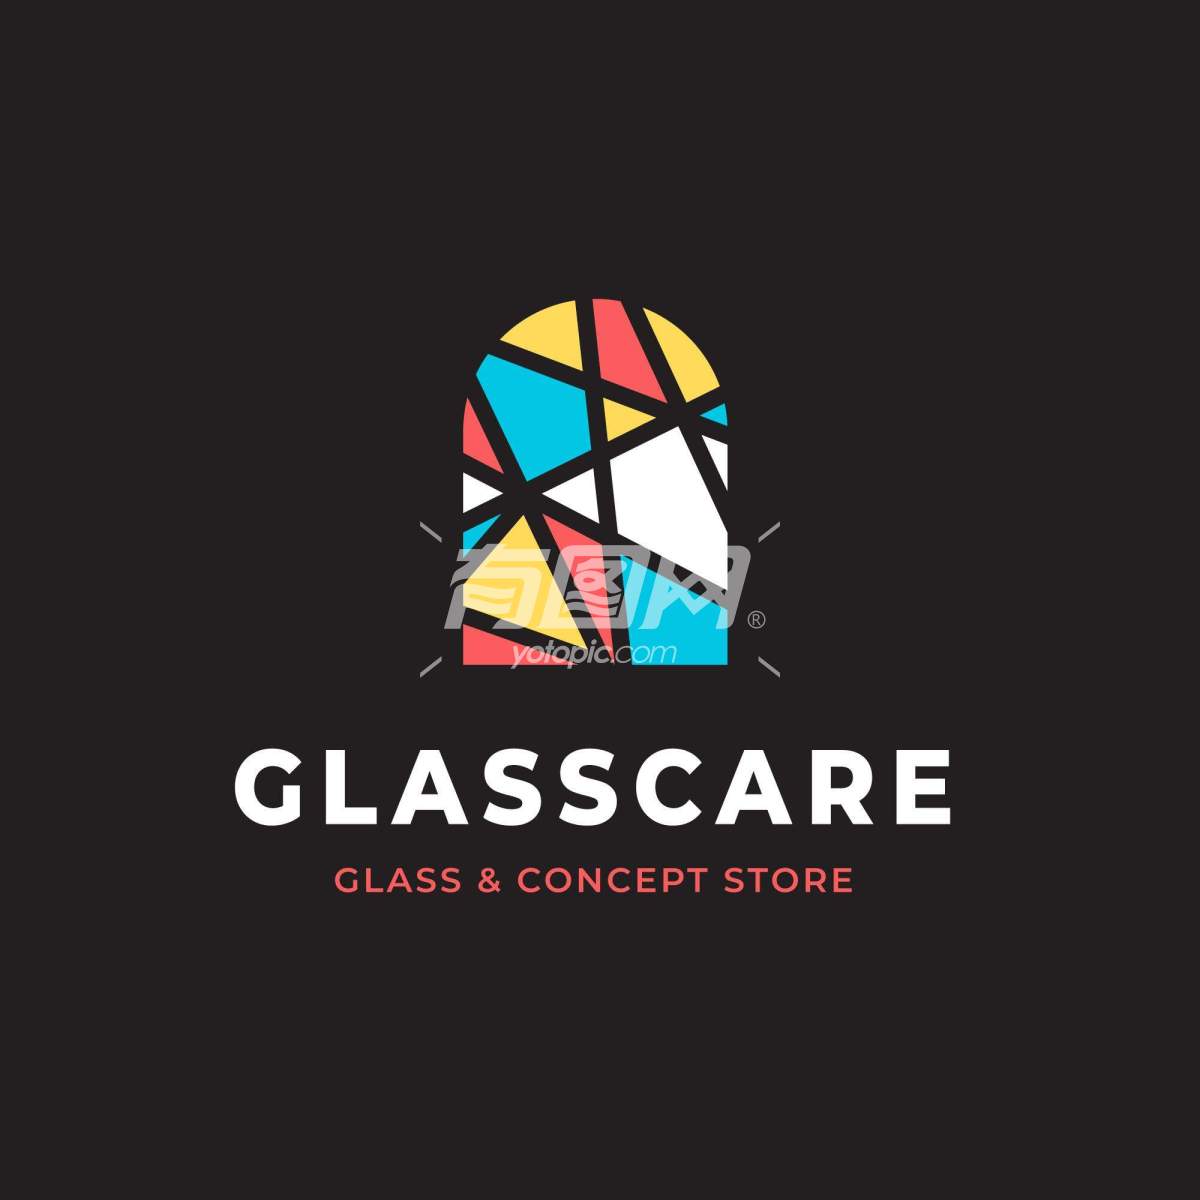 Glasscare玻璃概念店